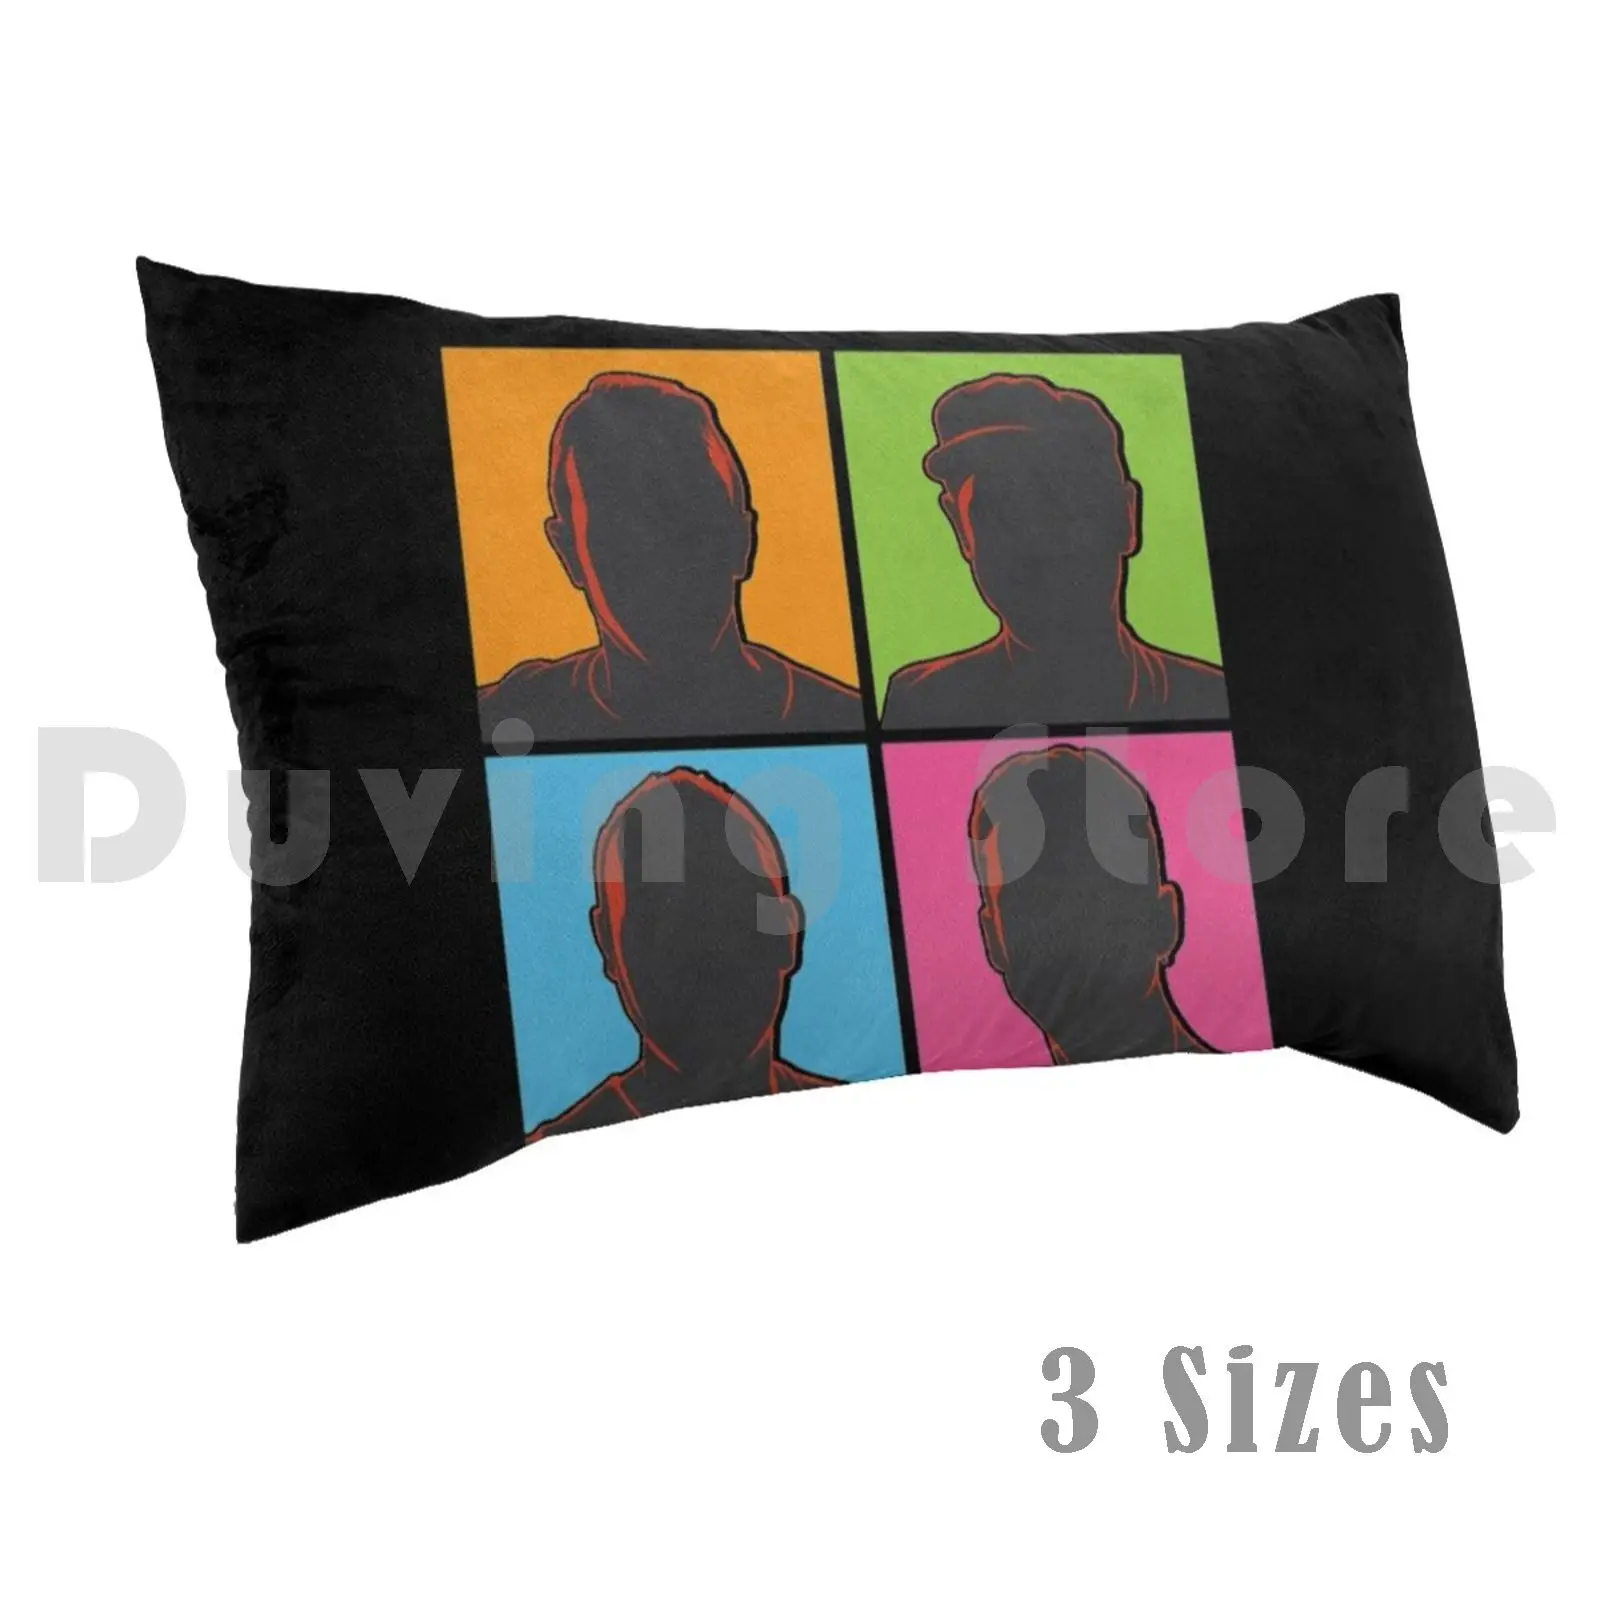 Members Silhouettes Design Pillow Case DIY 50x75 Members Chris Will Guy Berryman Jonny Buckland